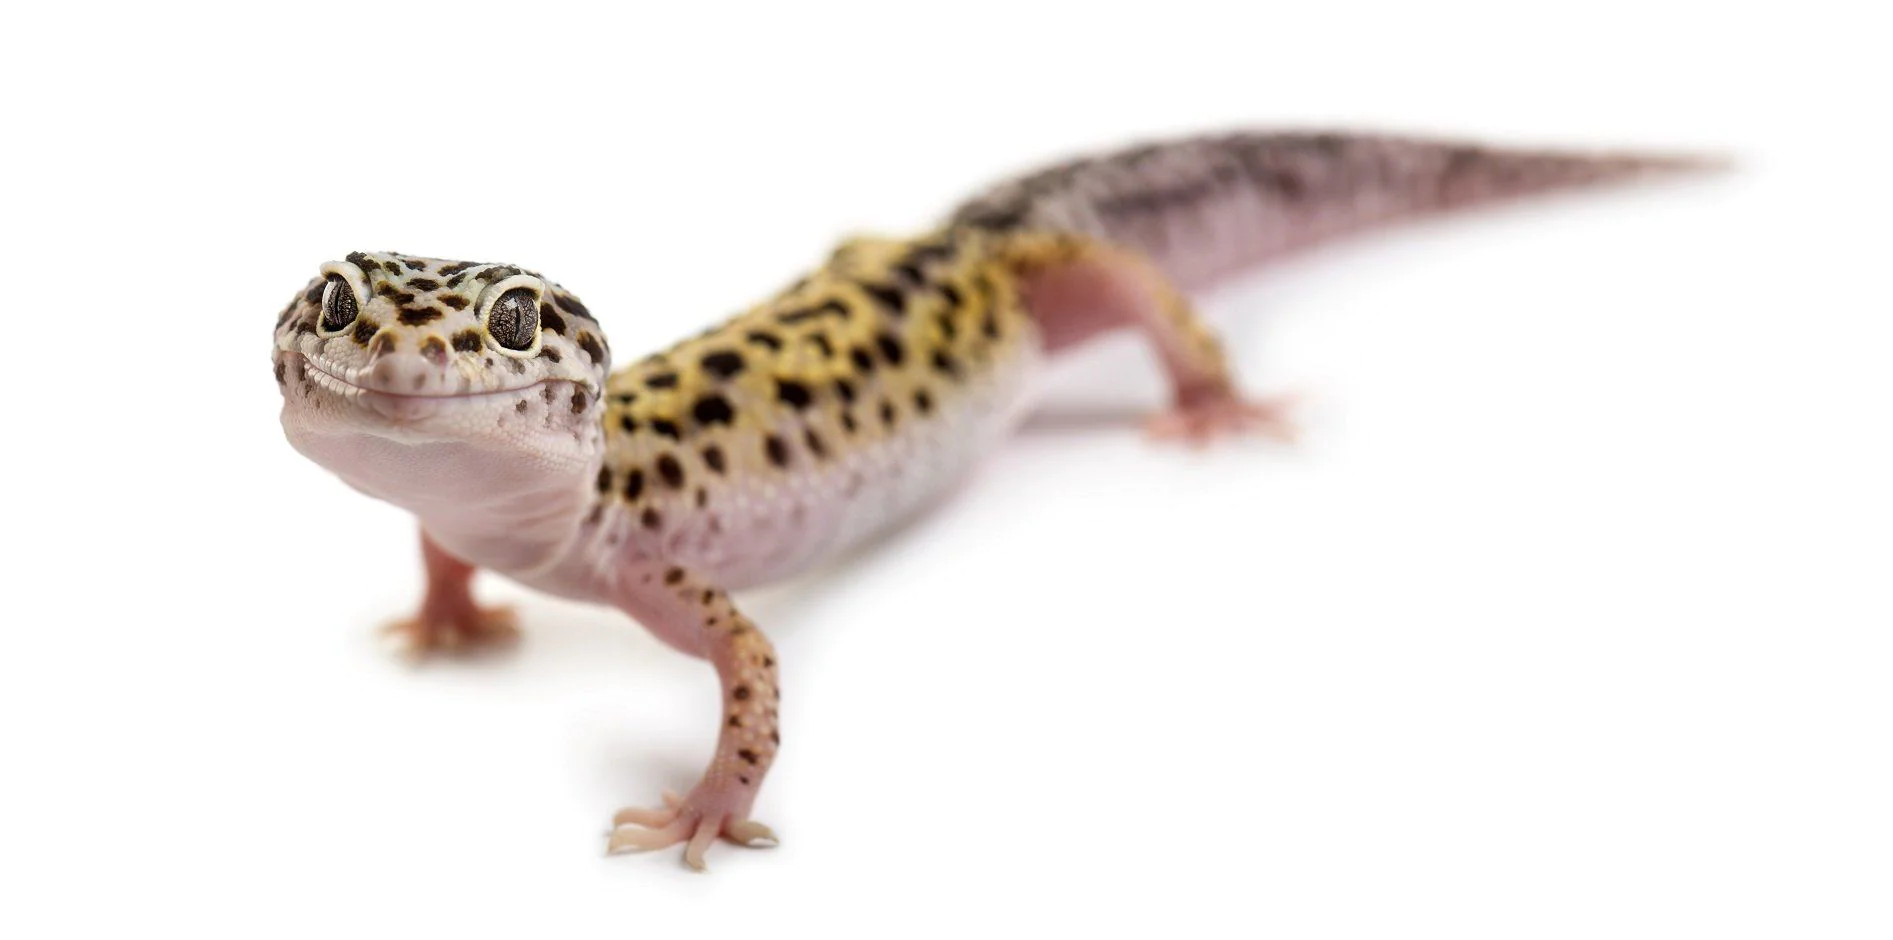 Hygiene practices for Leopard geckos